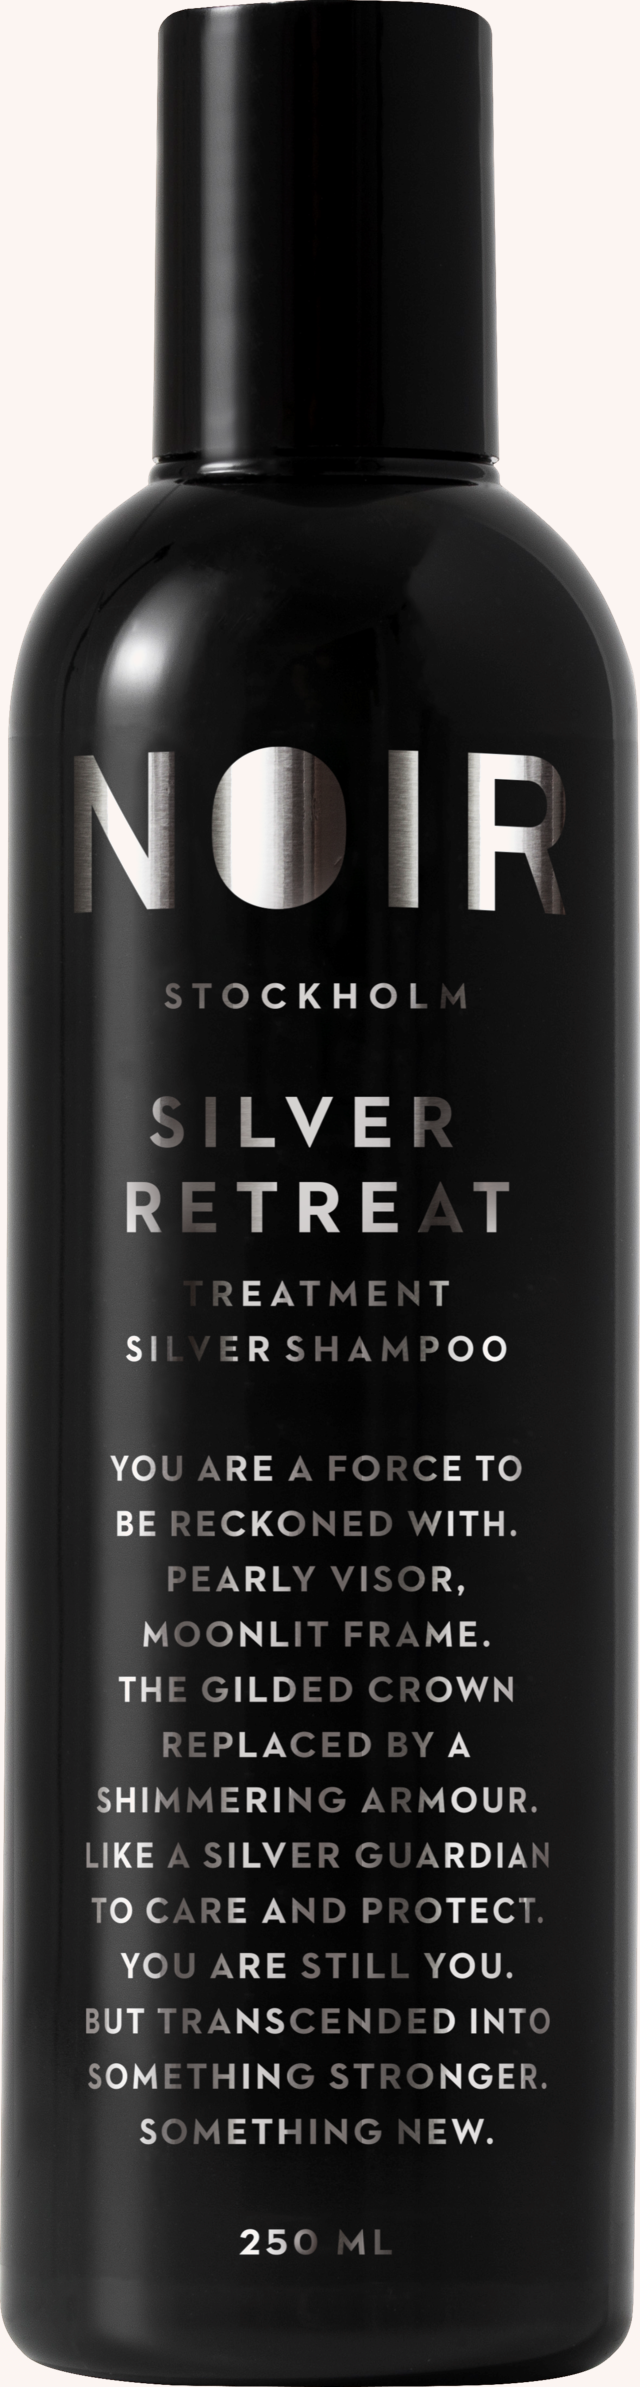 Silver Retreat Treatment Silver Shampoo 250 ml